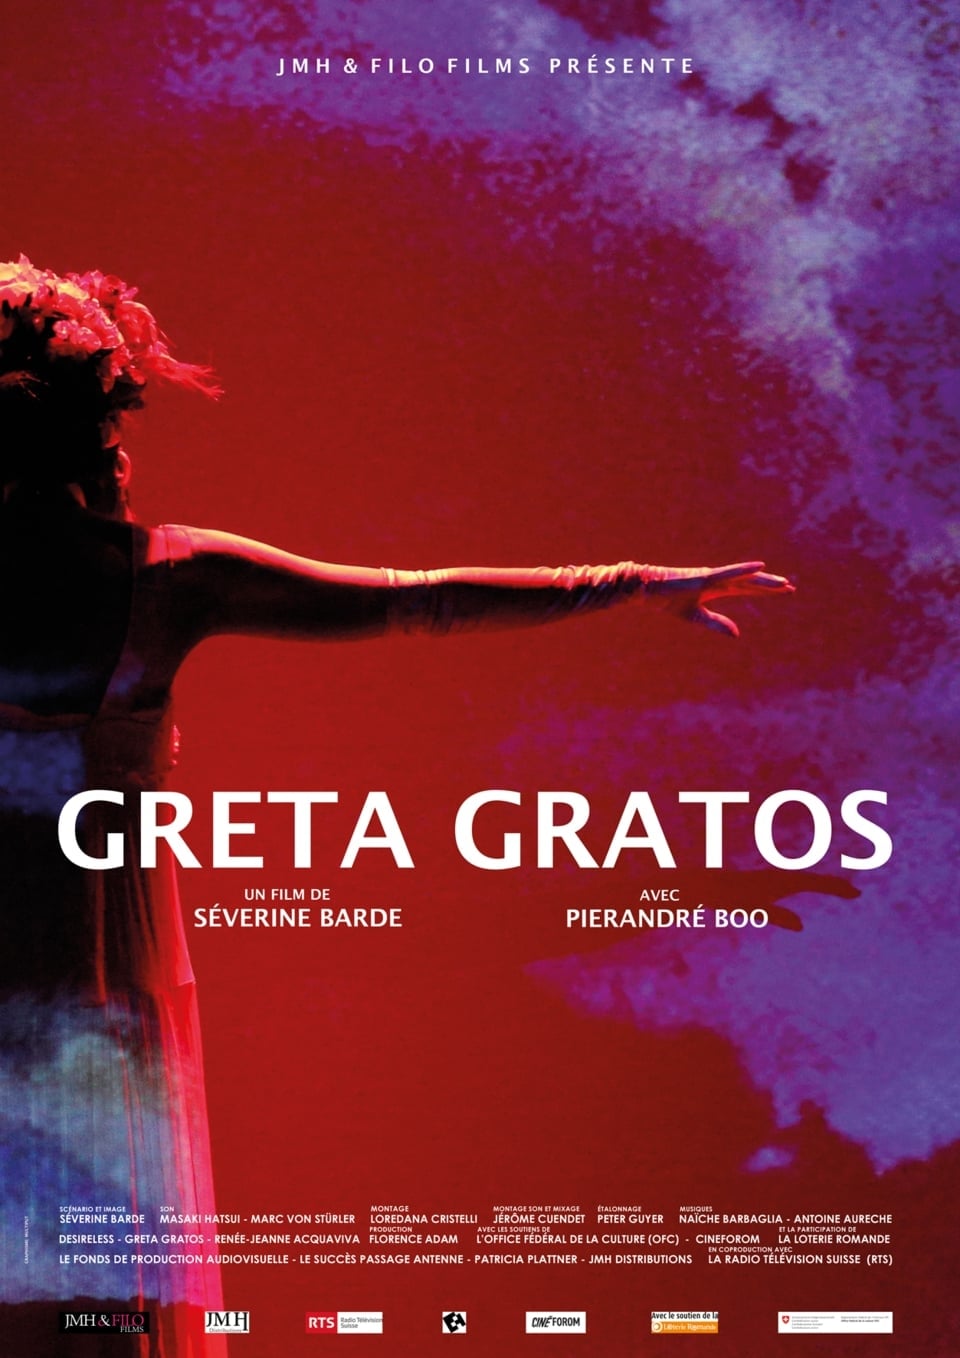 Greta Gratos